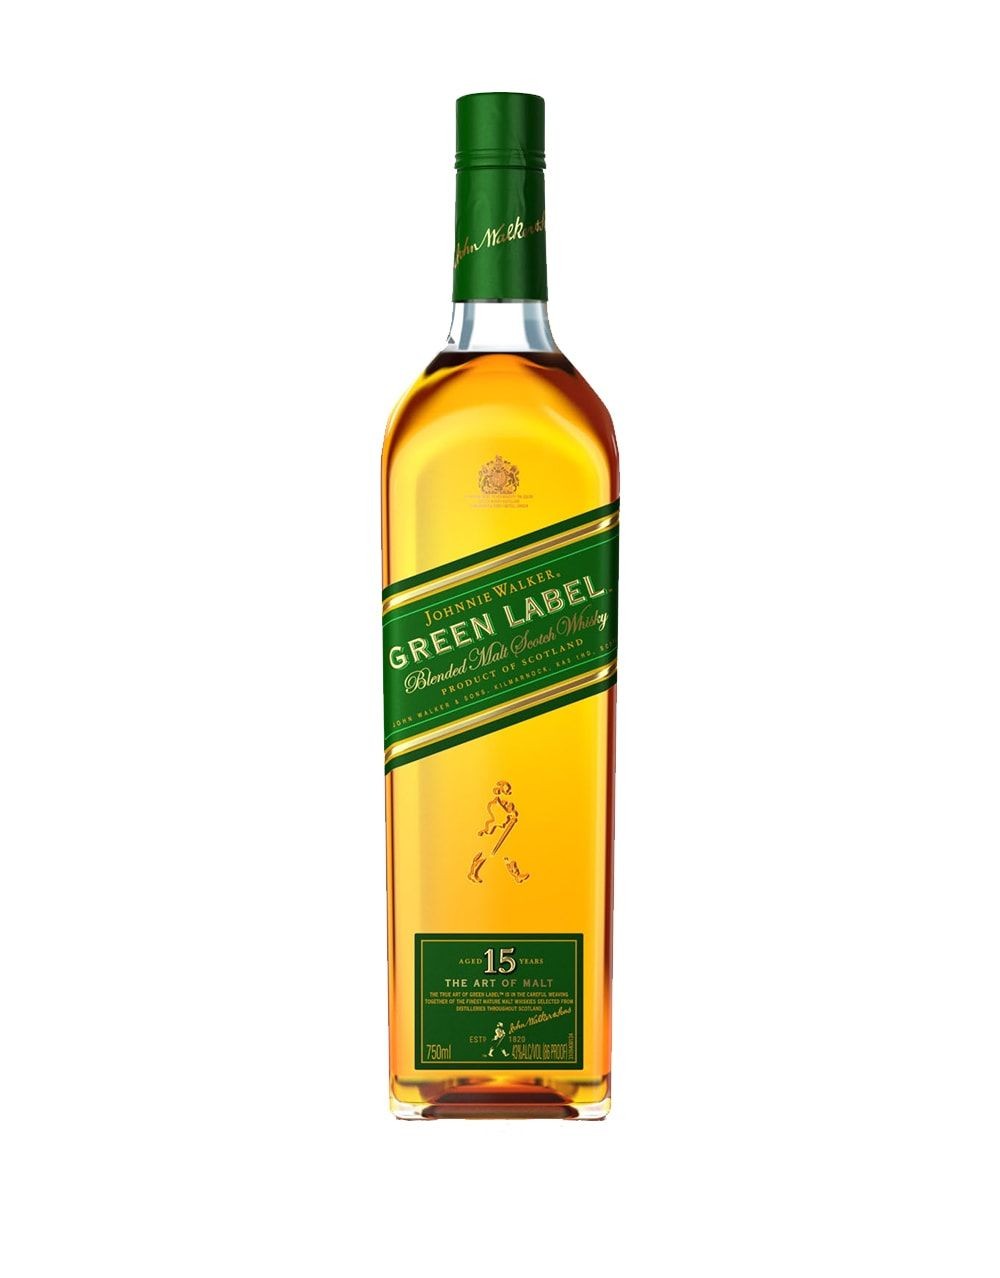 Johnnie Walker Green Label Scotch Whisky | Buy Online or